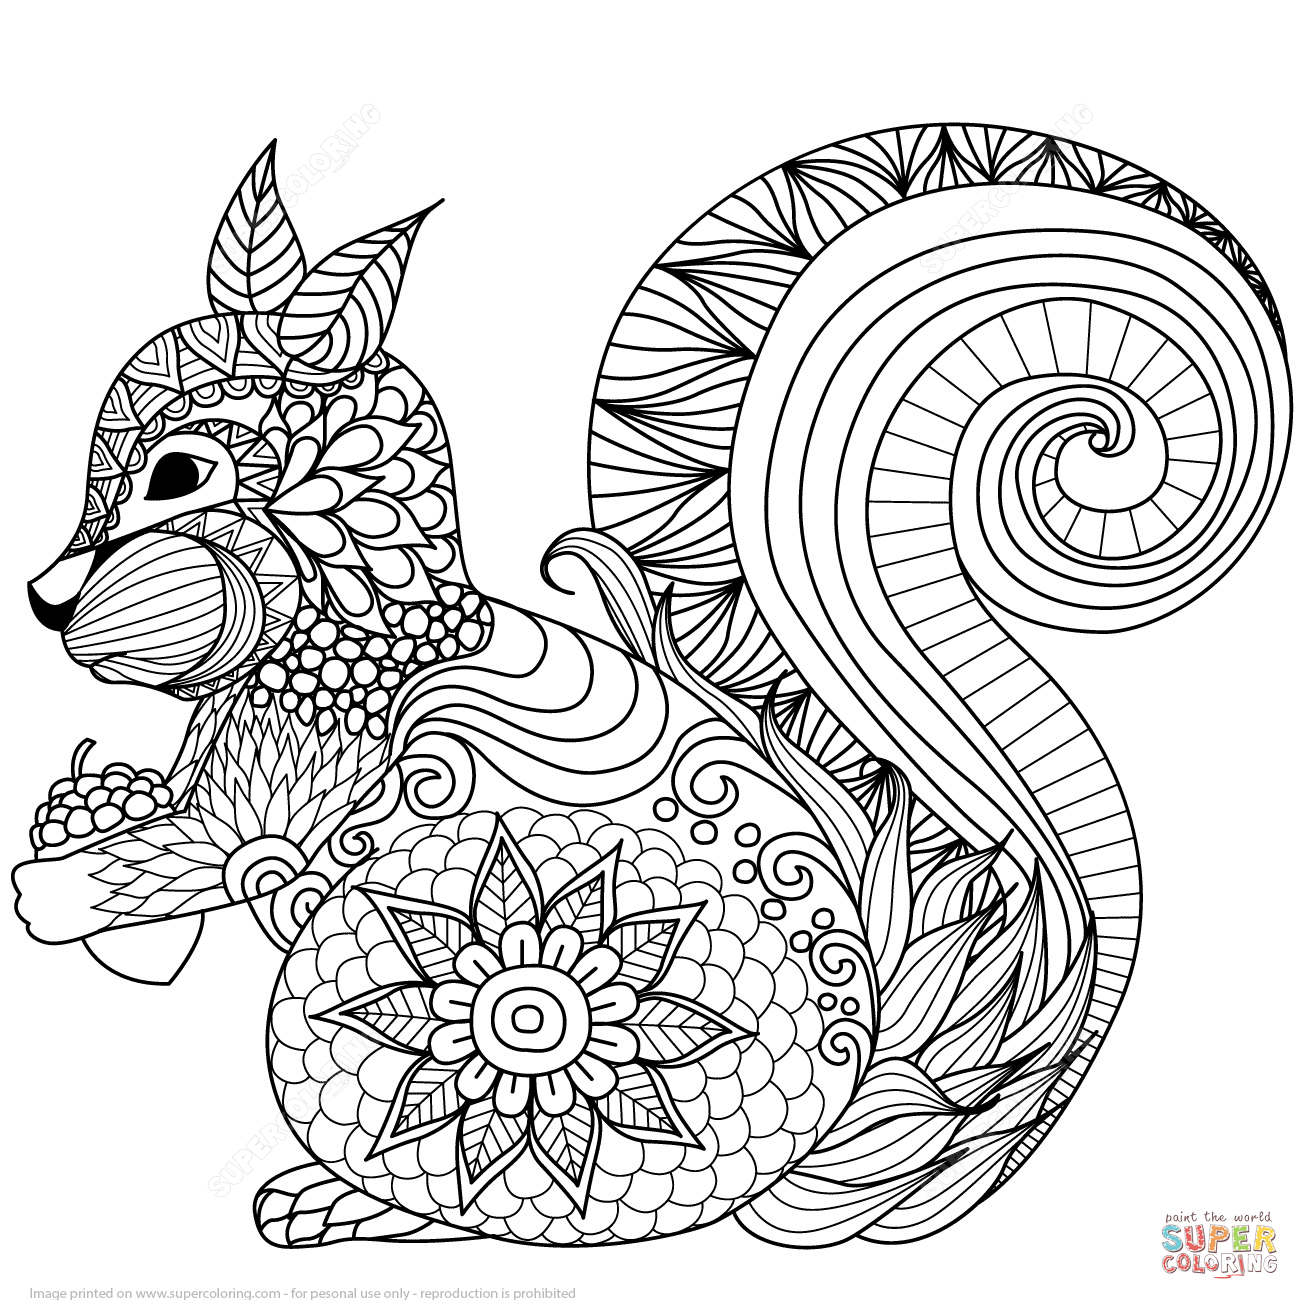 animal-mandala-coloring-pages-at-getdrawings-free-download